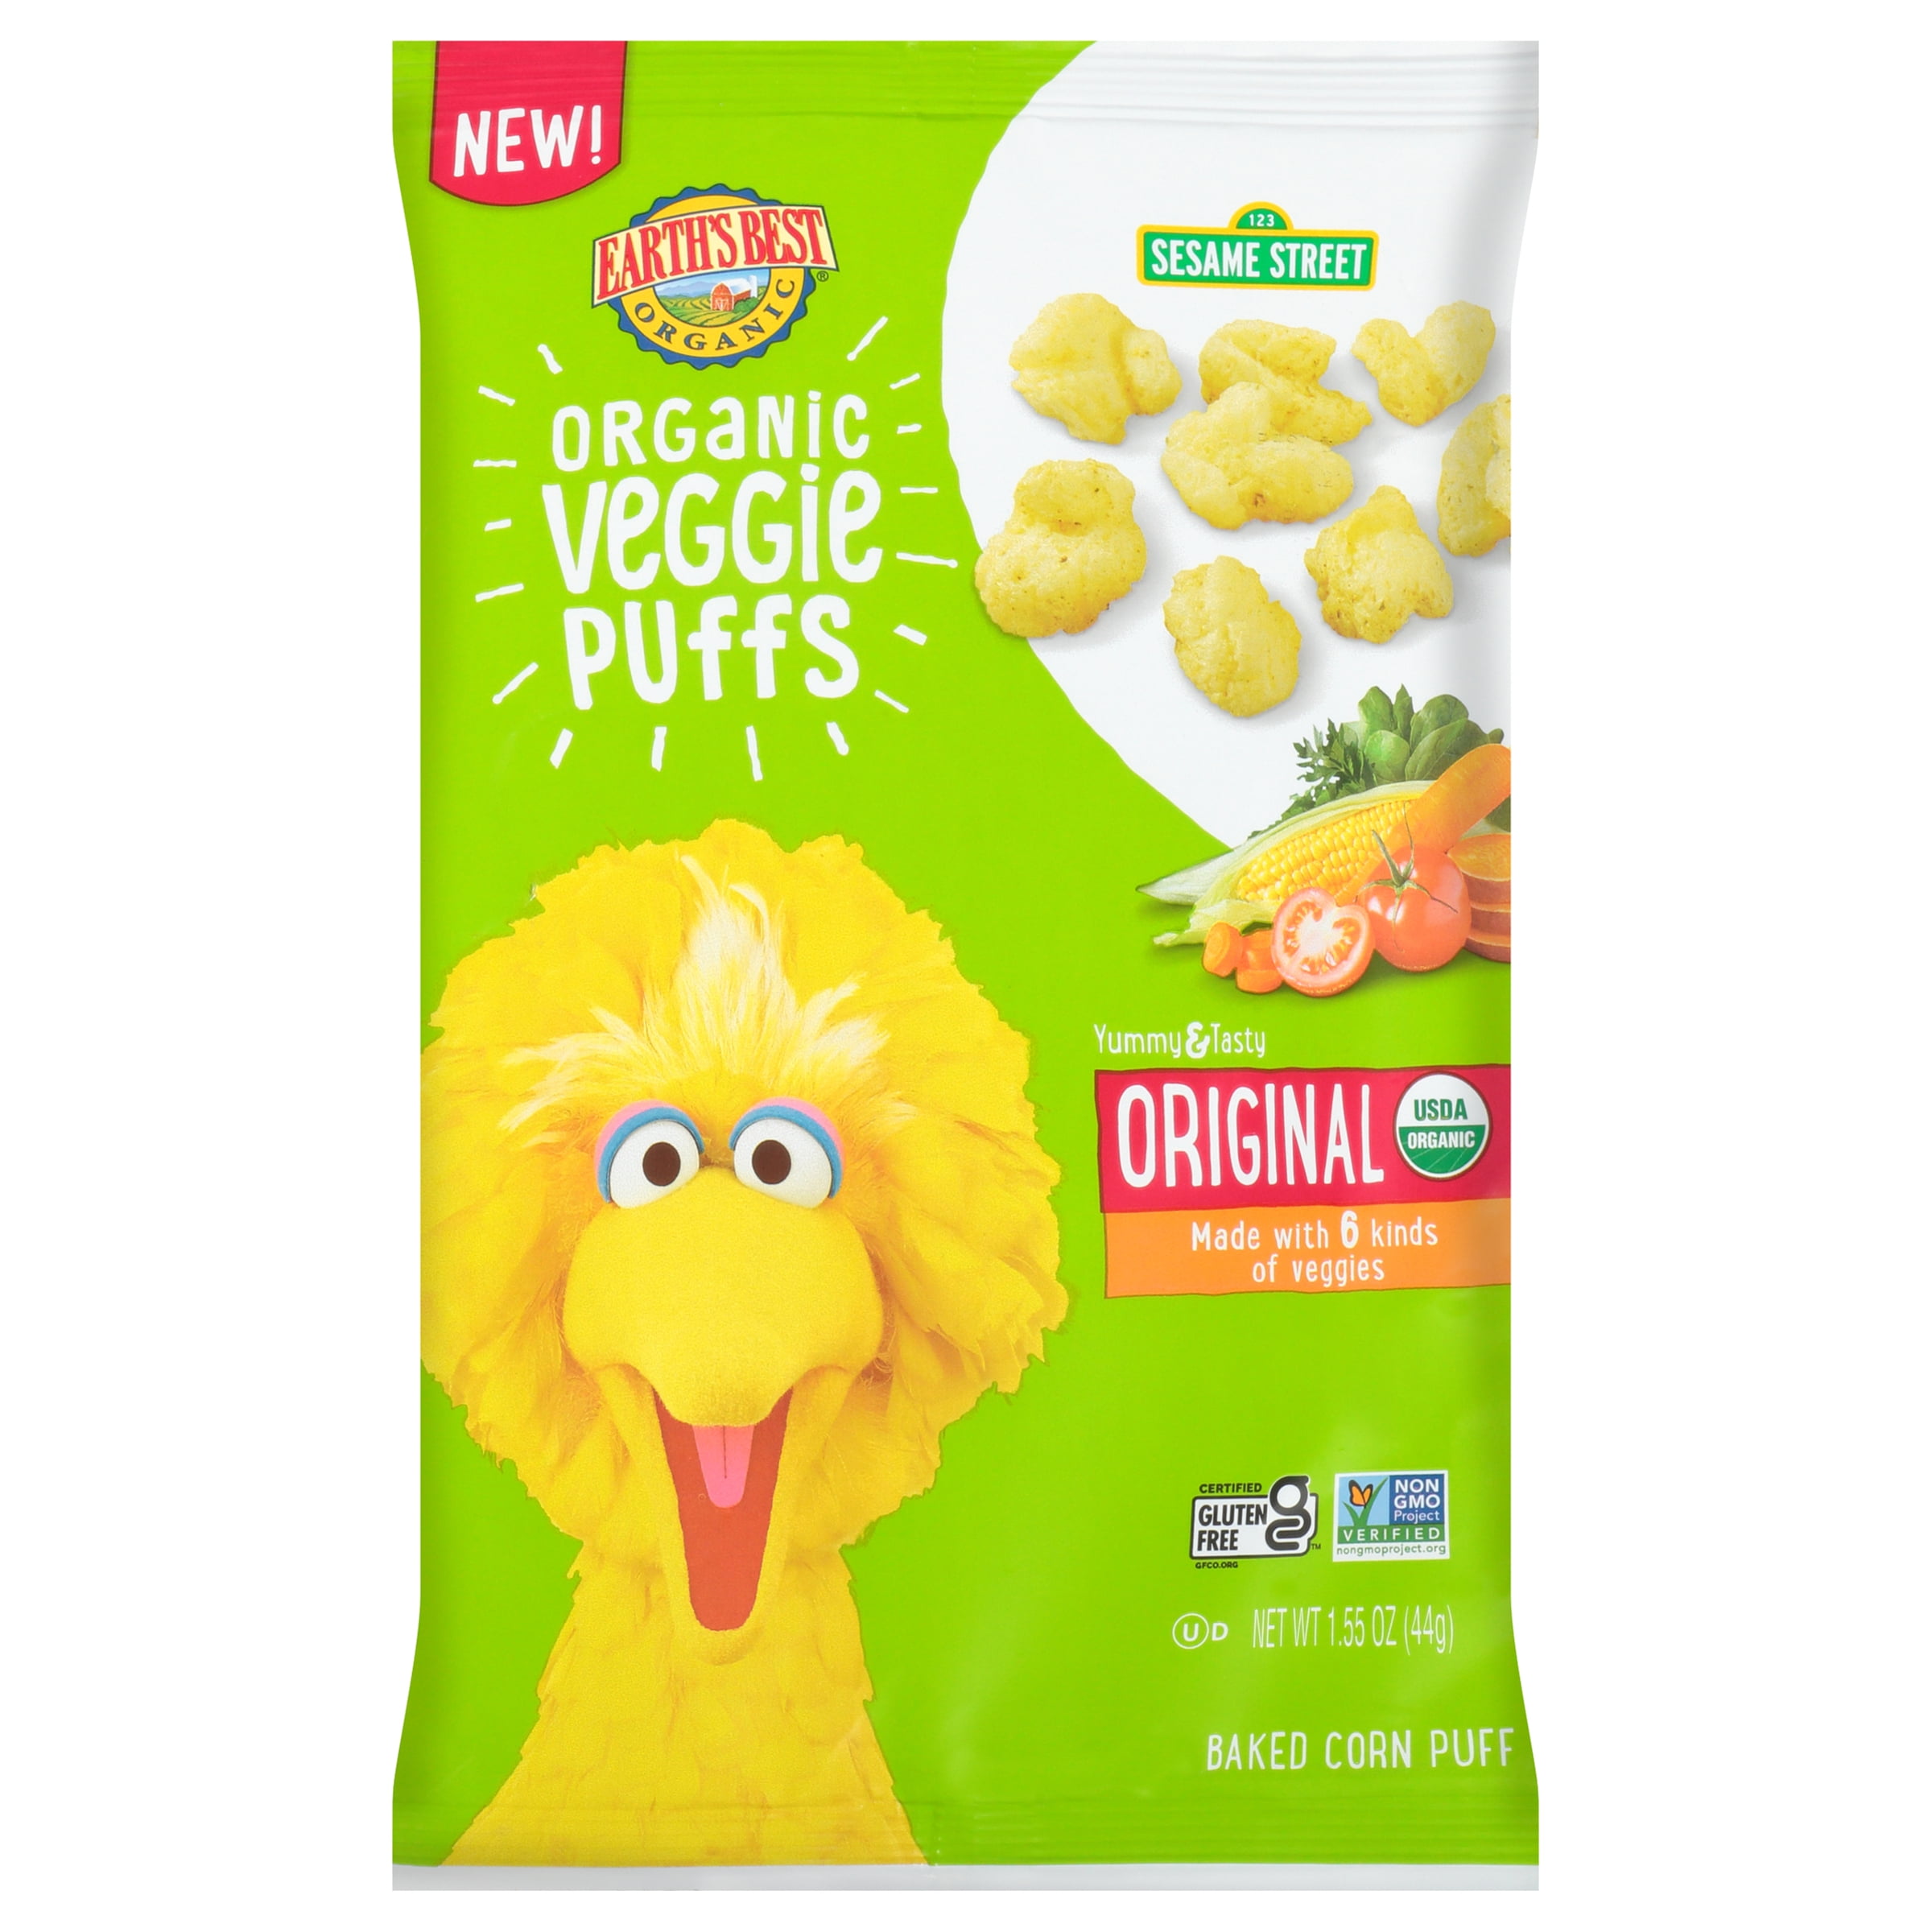 Earth's Best Sesame Street Baby Snack Organic Original Veggie Puffs, 1.55 oz Bag